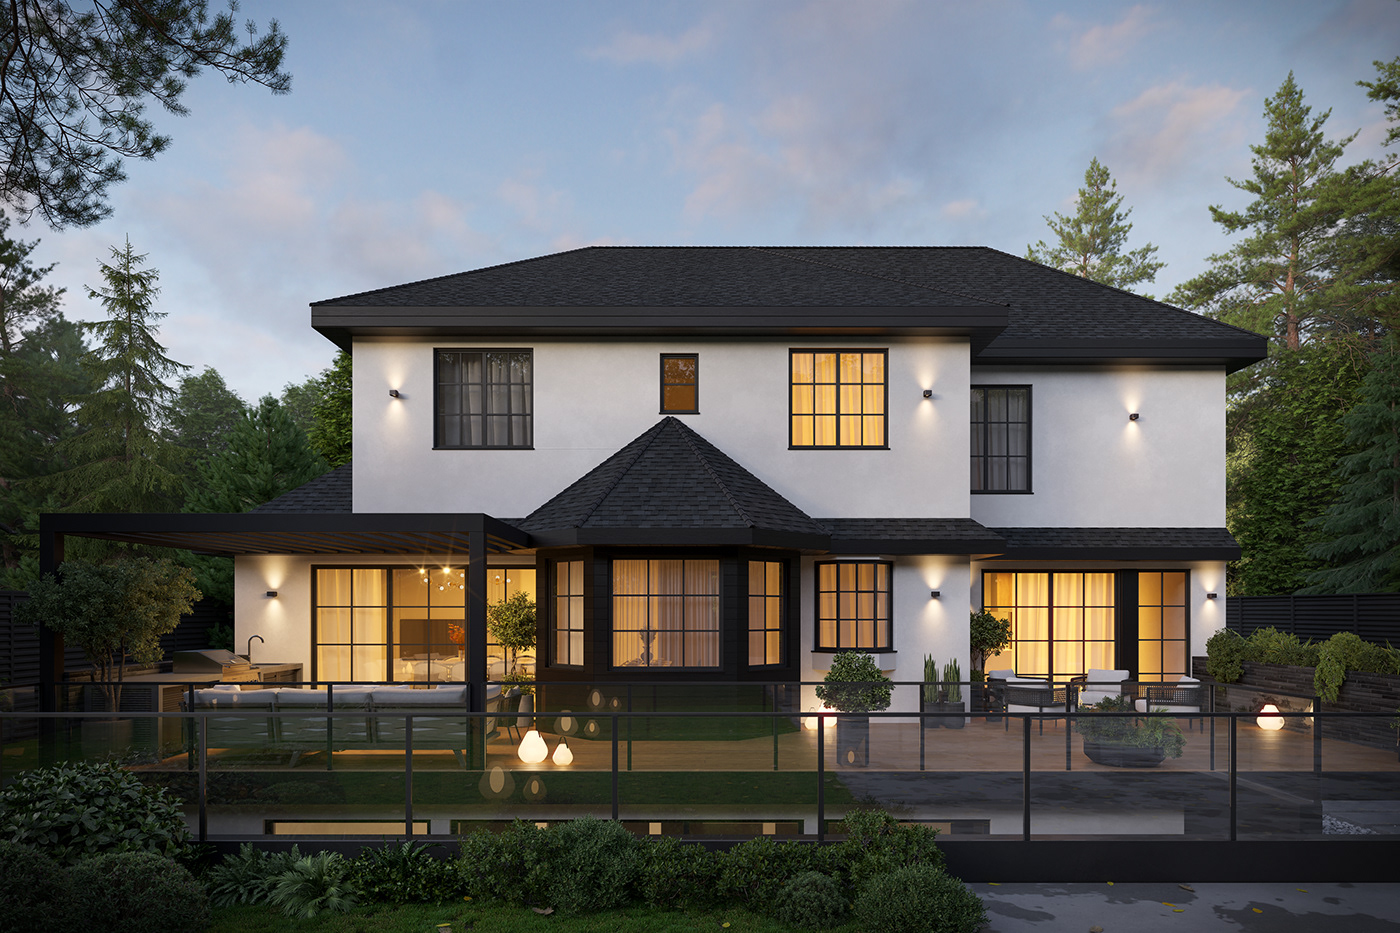 exterior architecture 3D archviz visualization Render corona 3dvisualization house Outdoor